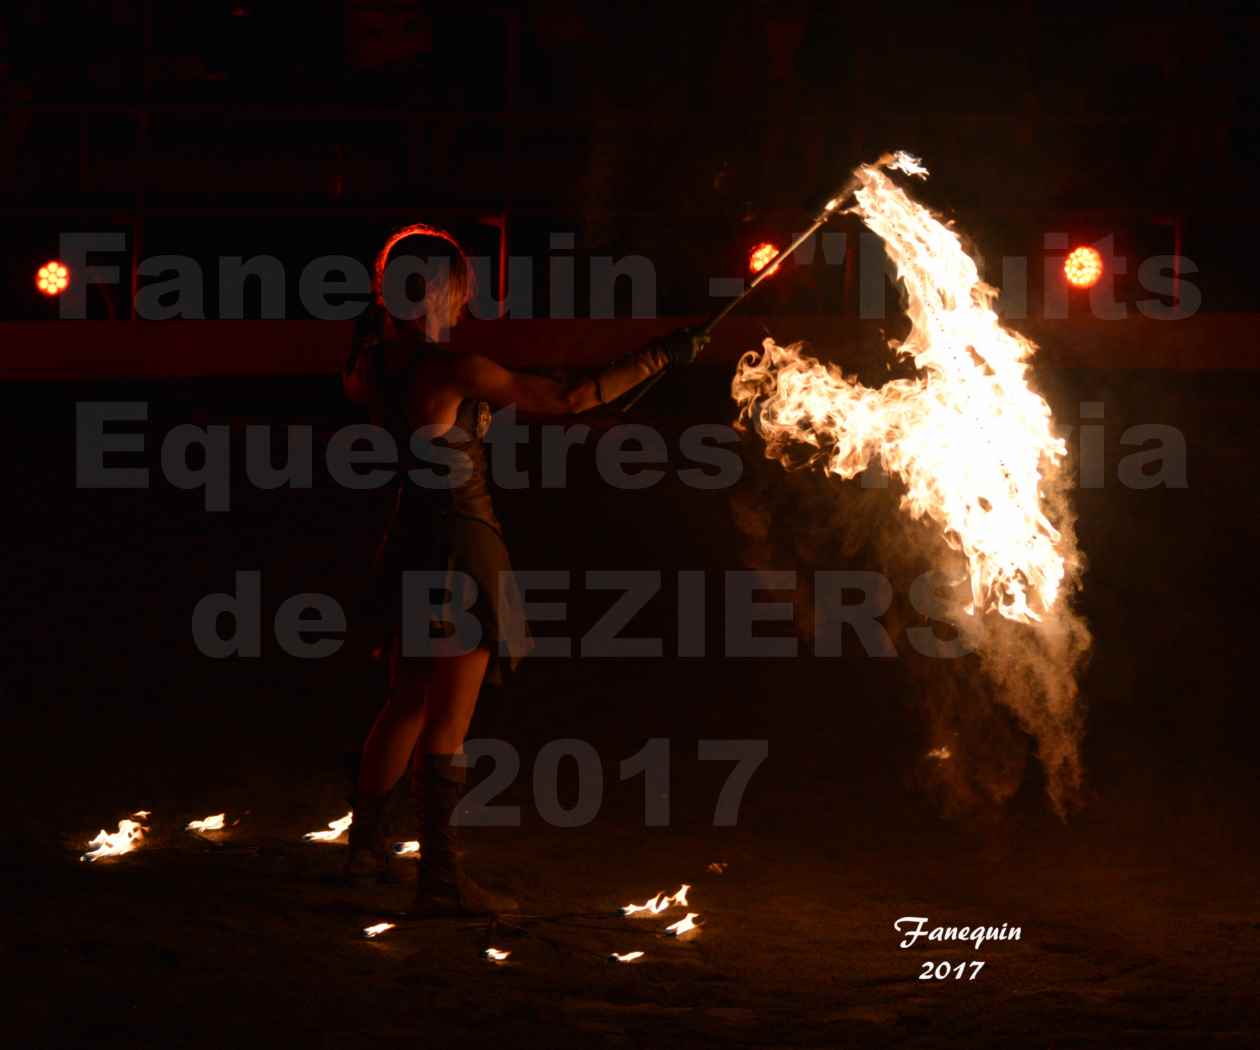 "Nuits Équestres" lors de la Féria de BEZIERS 2017 - Bobasses Artifice - 05